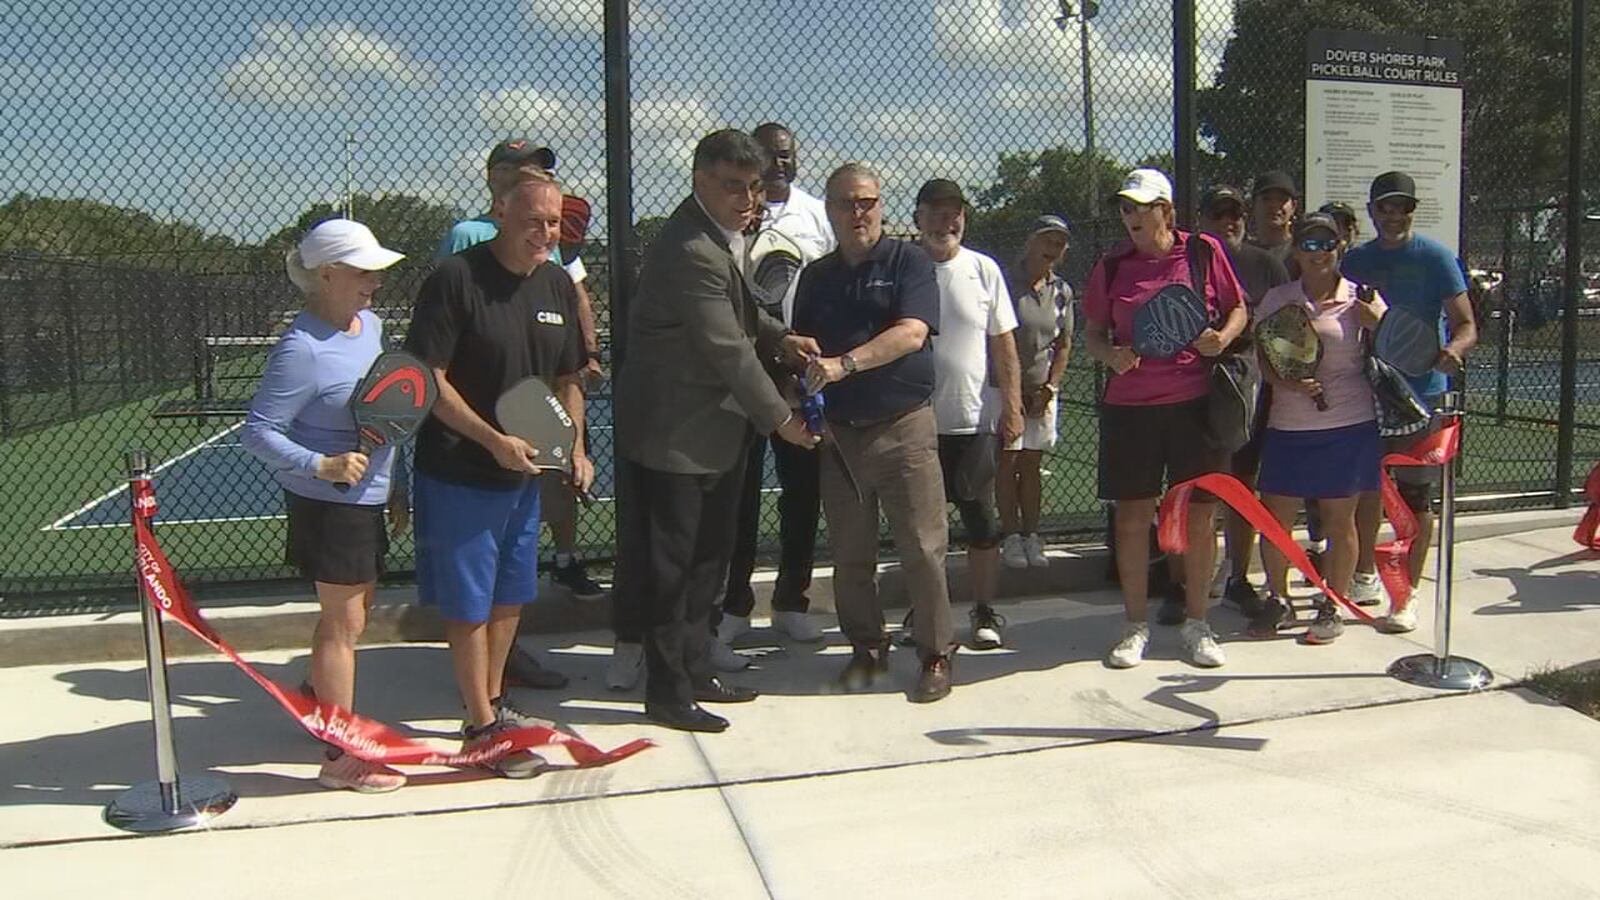 6 new pickleball courts open in Orlando WFTV